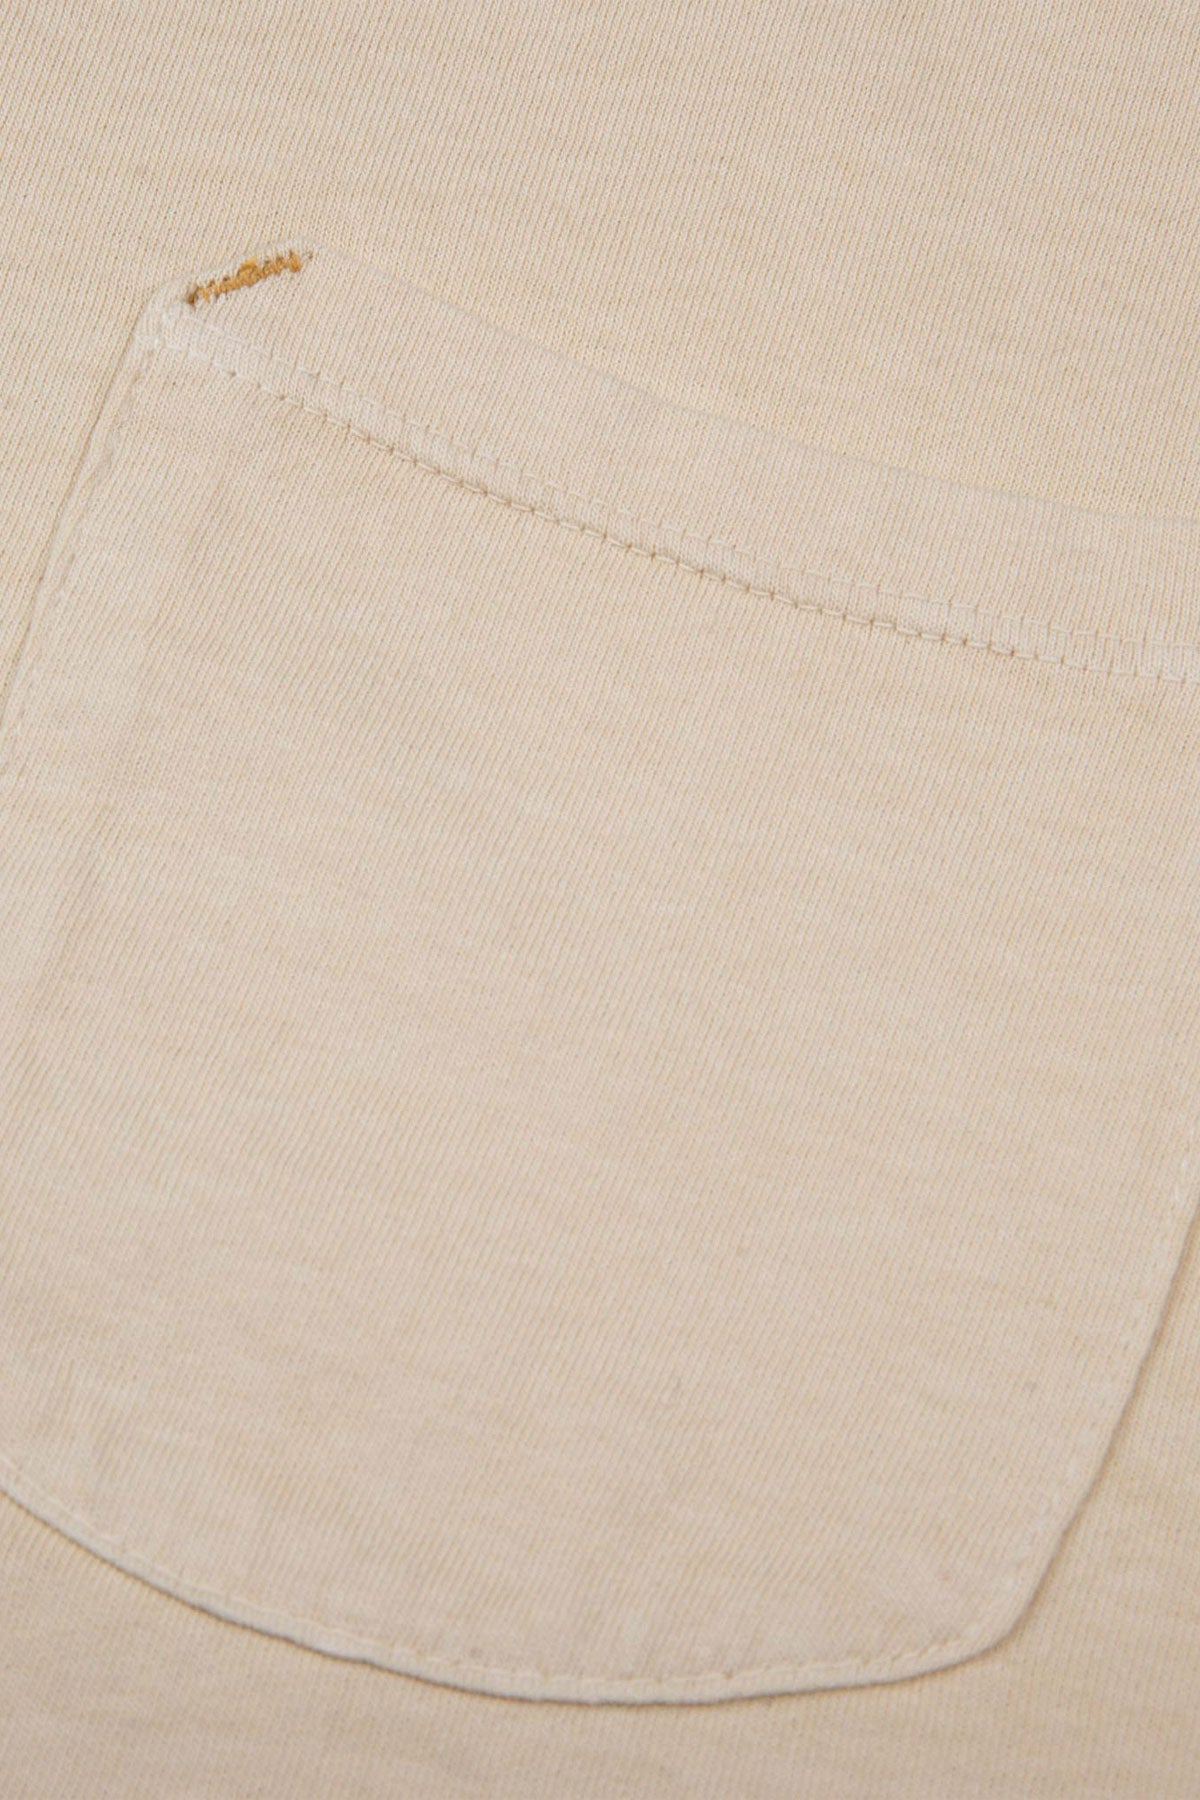 Freenote Cloth - 9 Ounce Pocket Tee - Cream